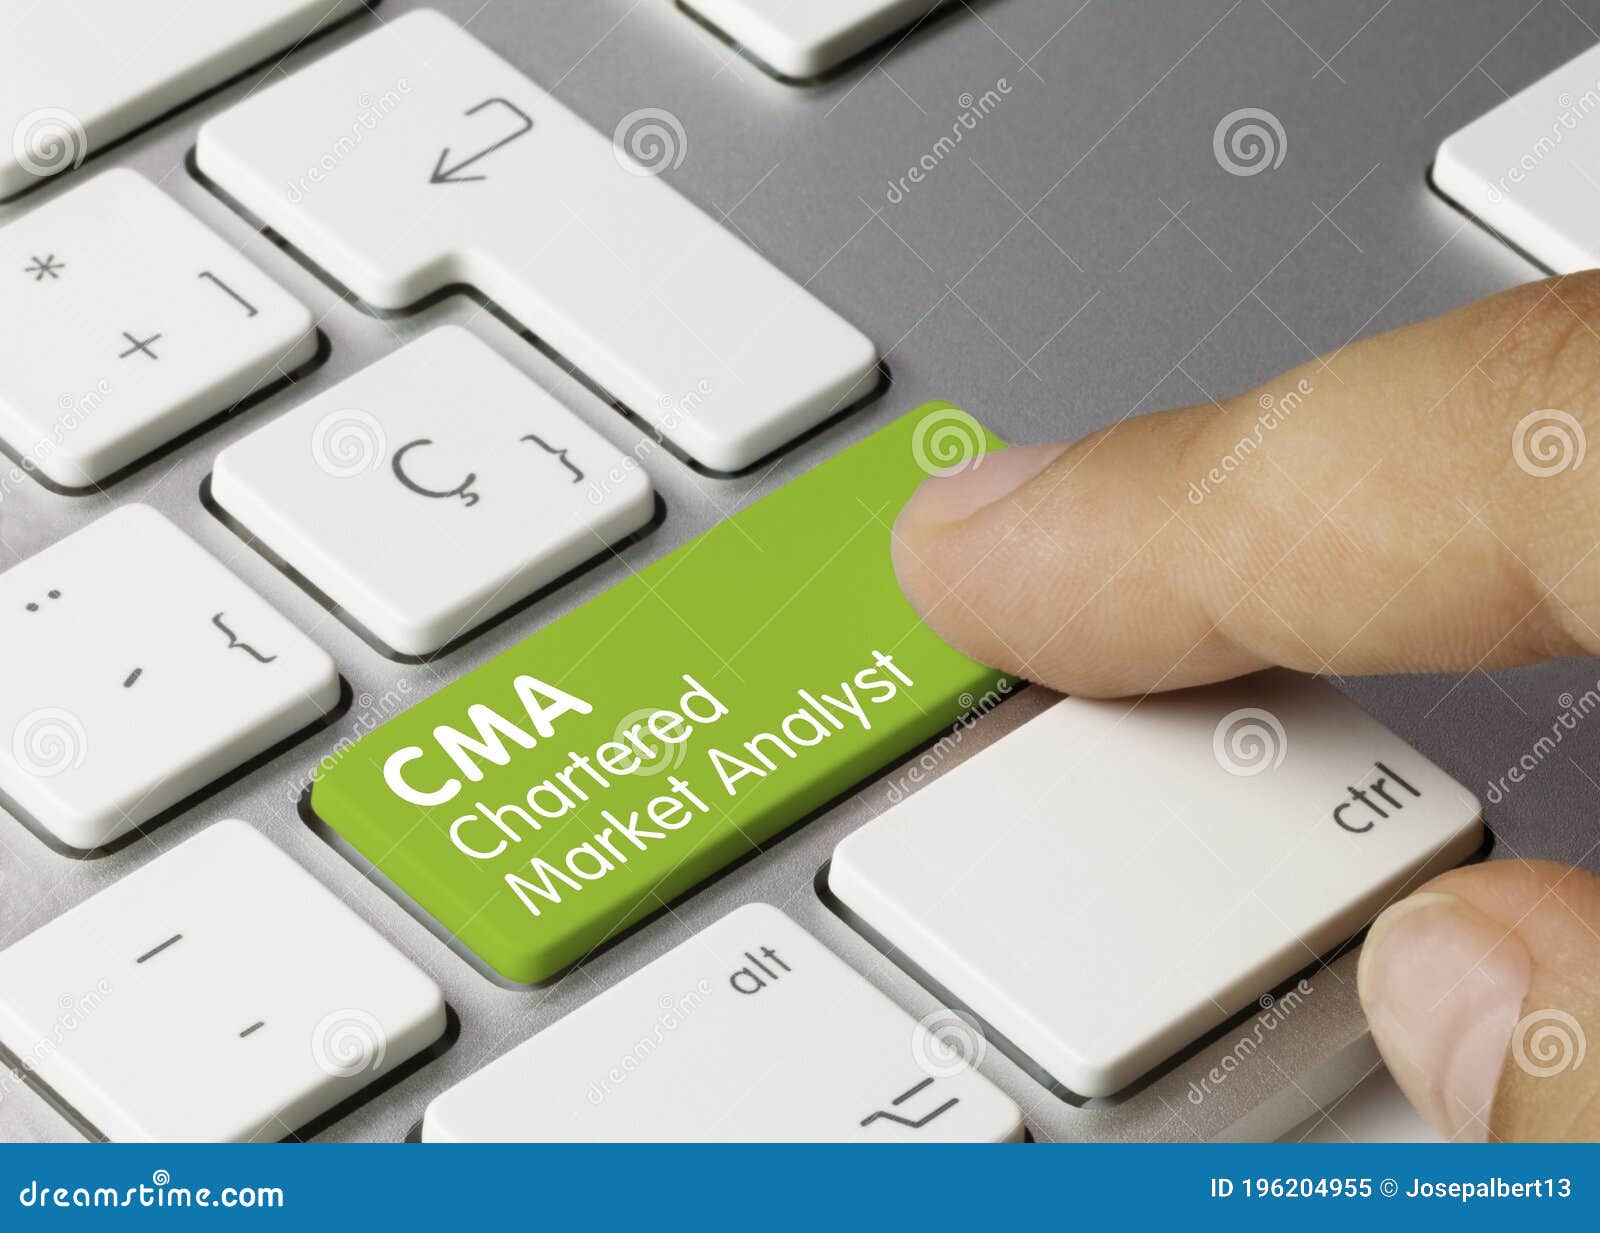 cma chartered market analyst - inscription on green keyboard key